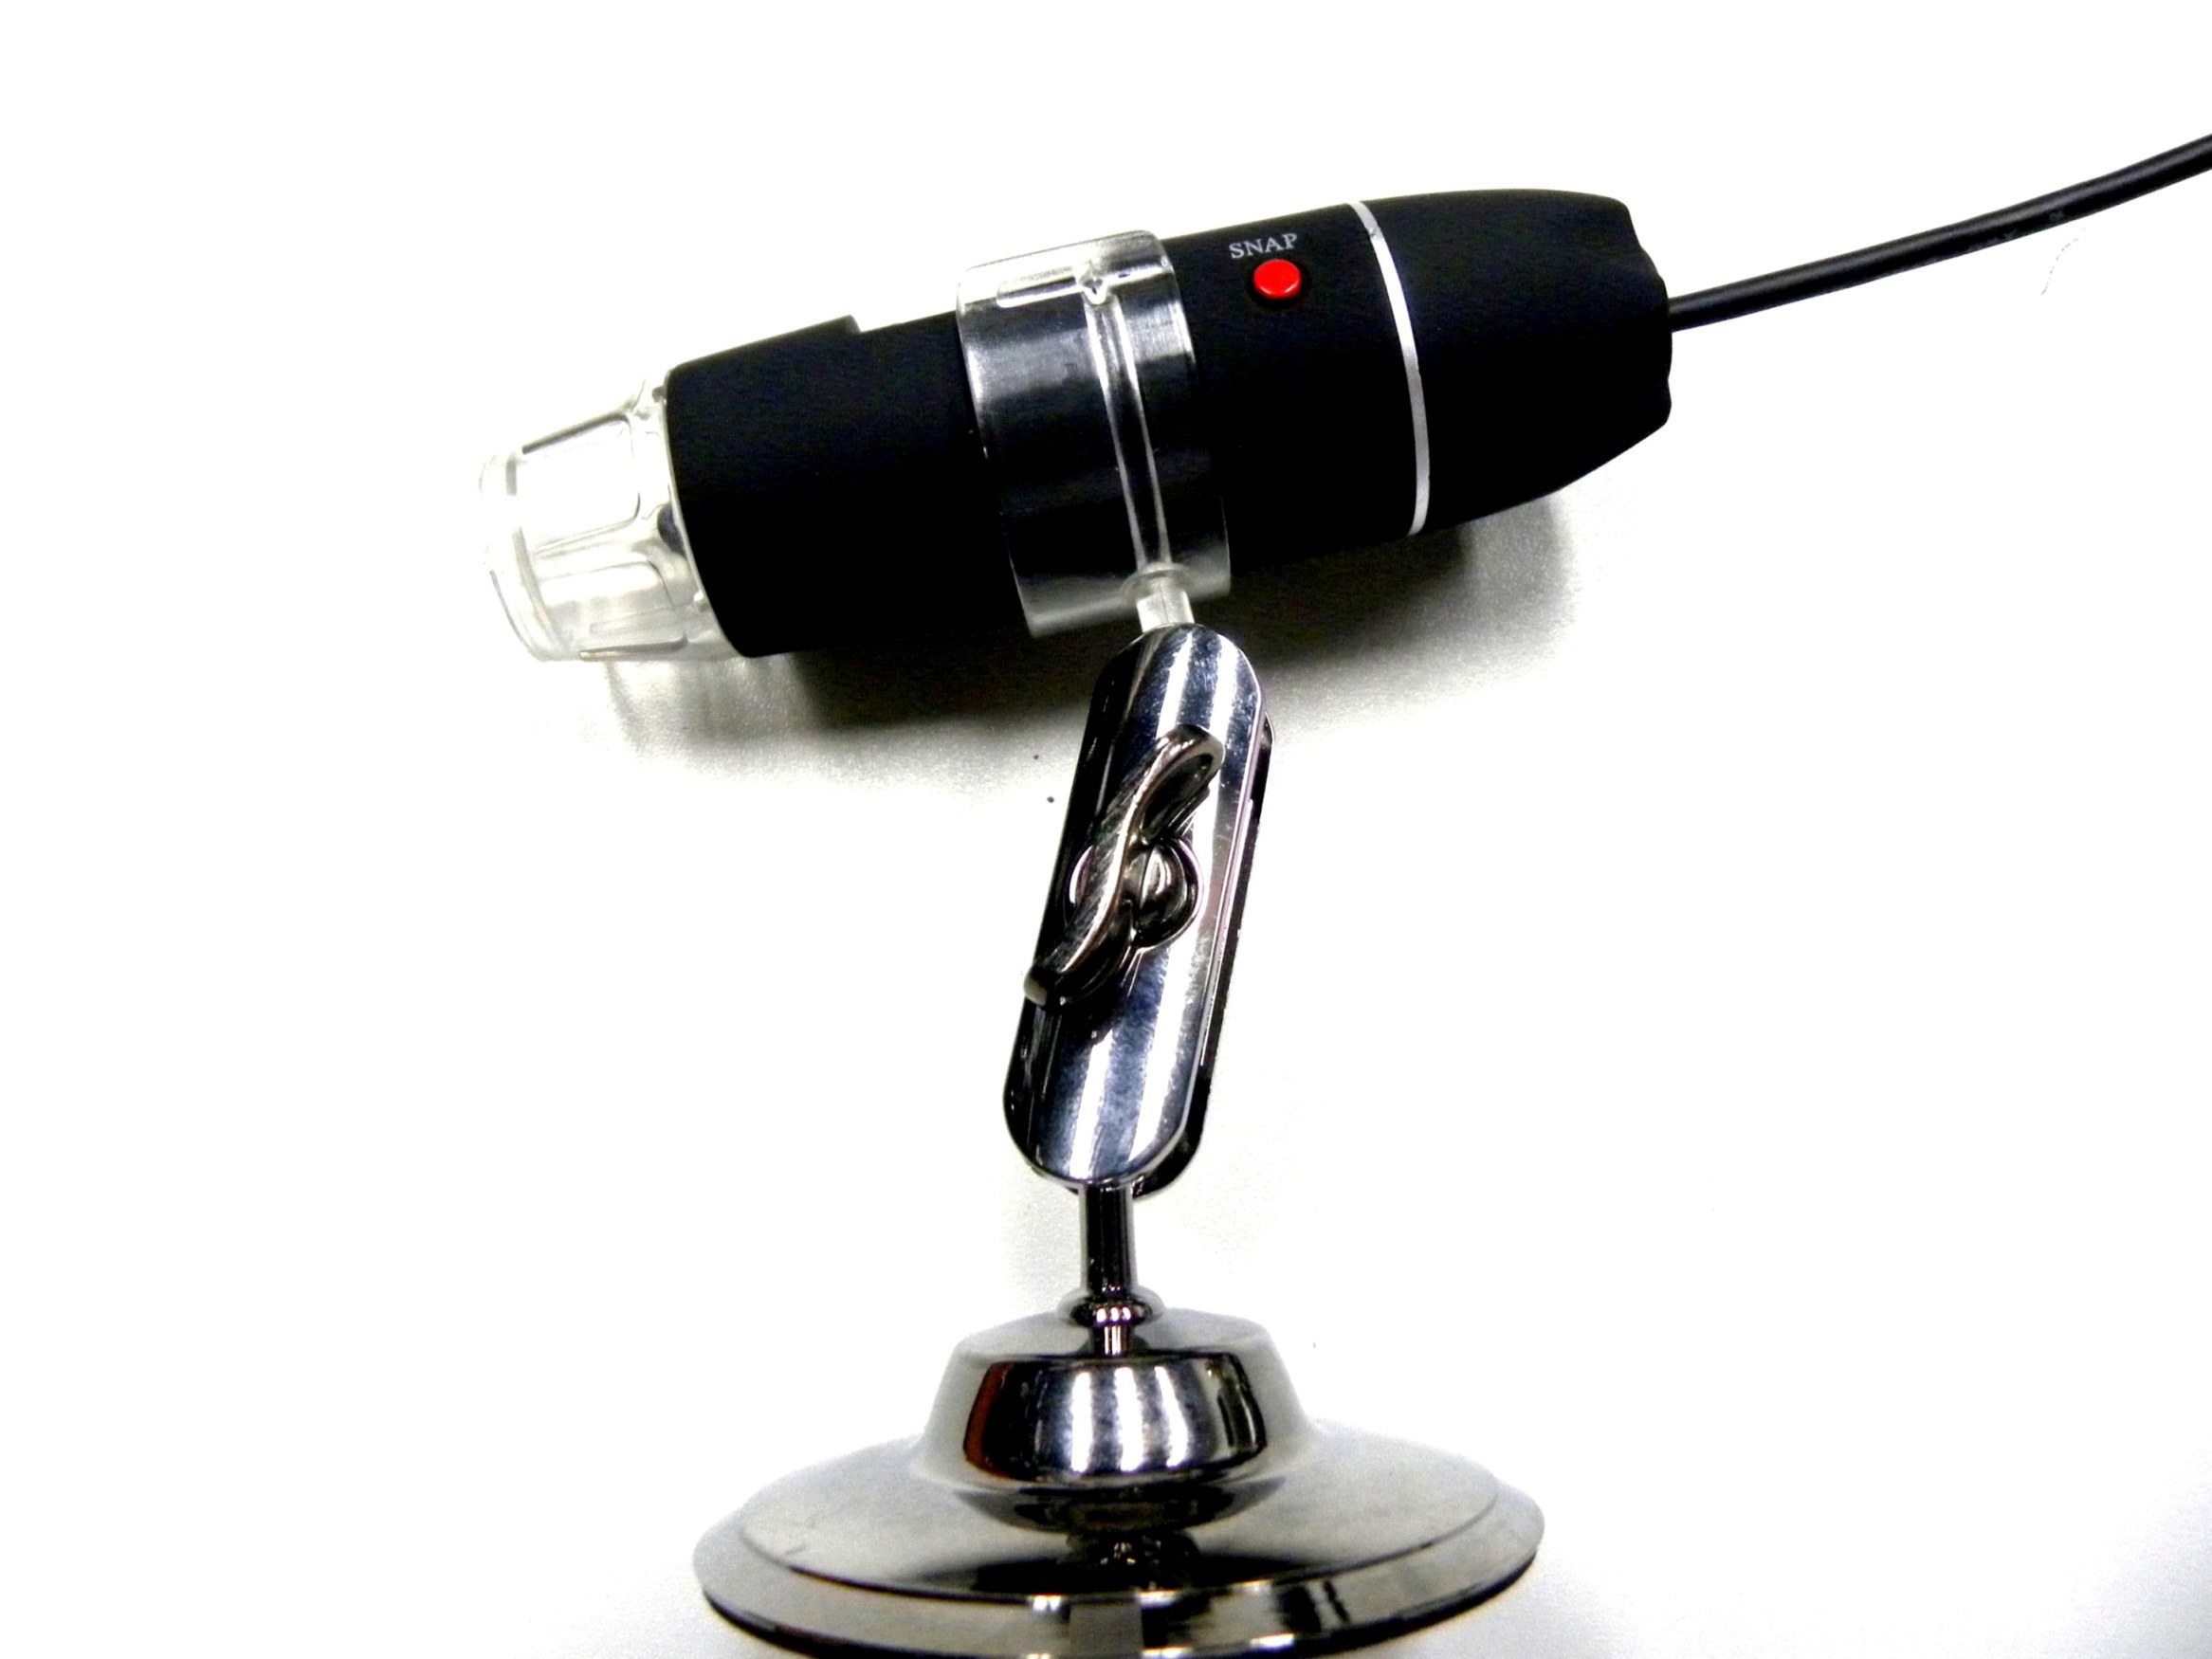 DMU-U400x microscopio digitale USB, fotocamera microscopio